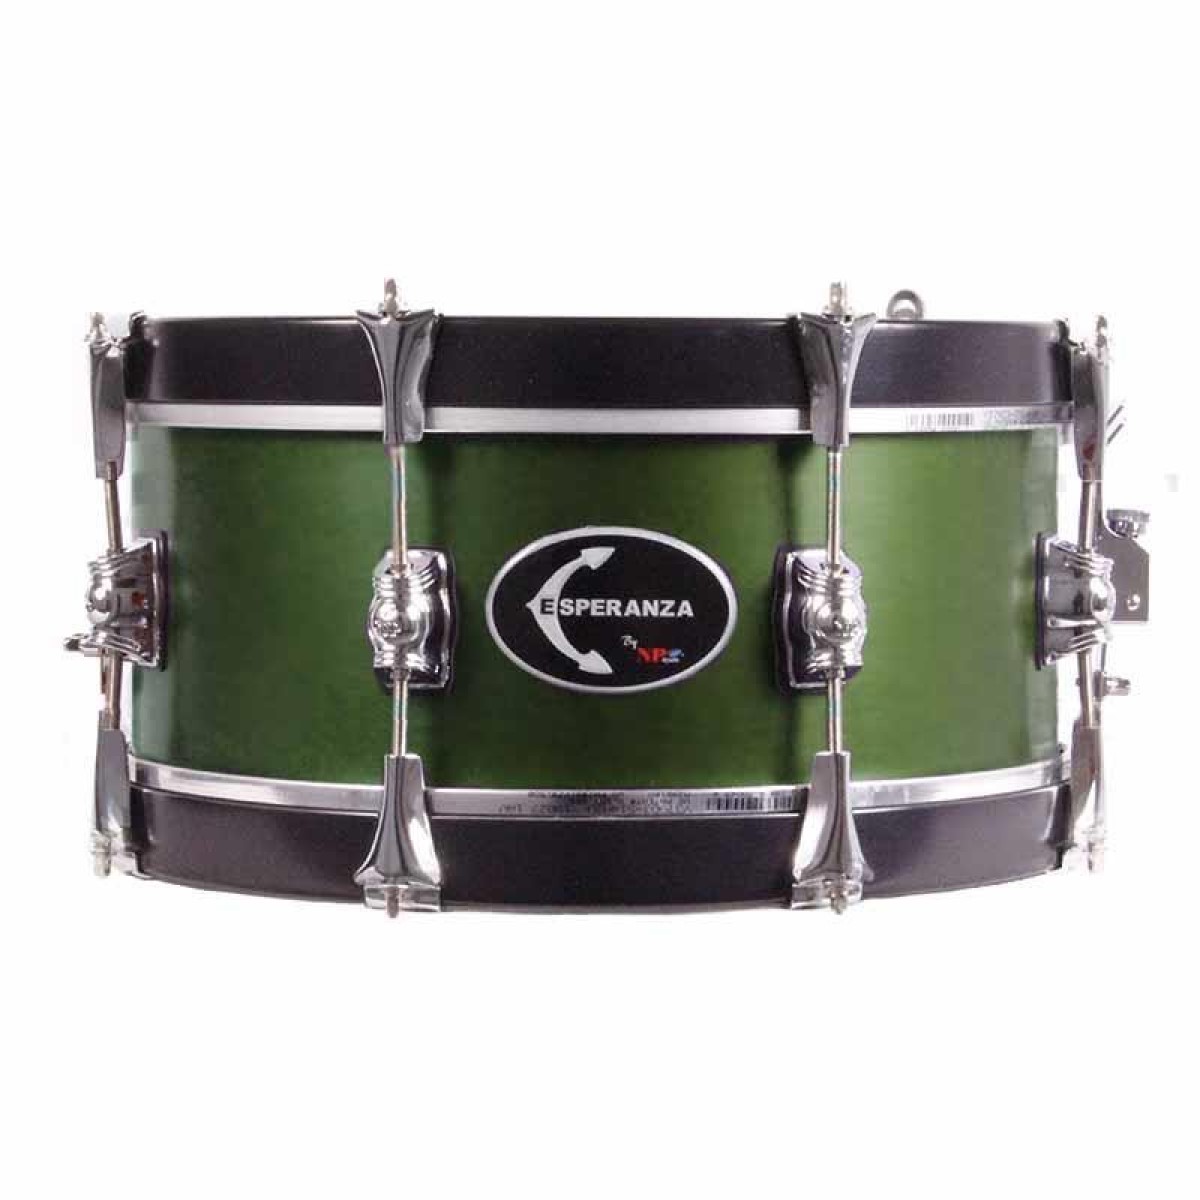 Maravilloso tambor Np Drums Sanyon Esperanza compralo en prieto musica barato